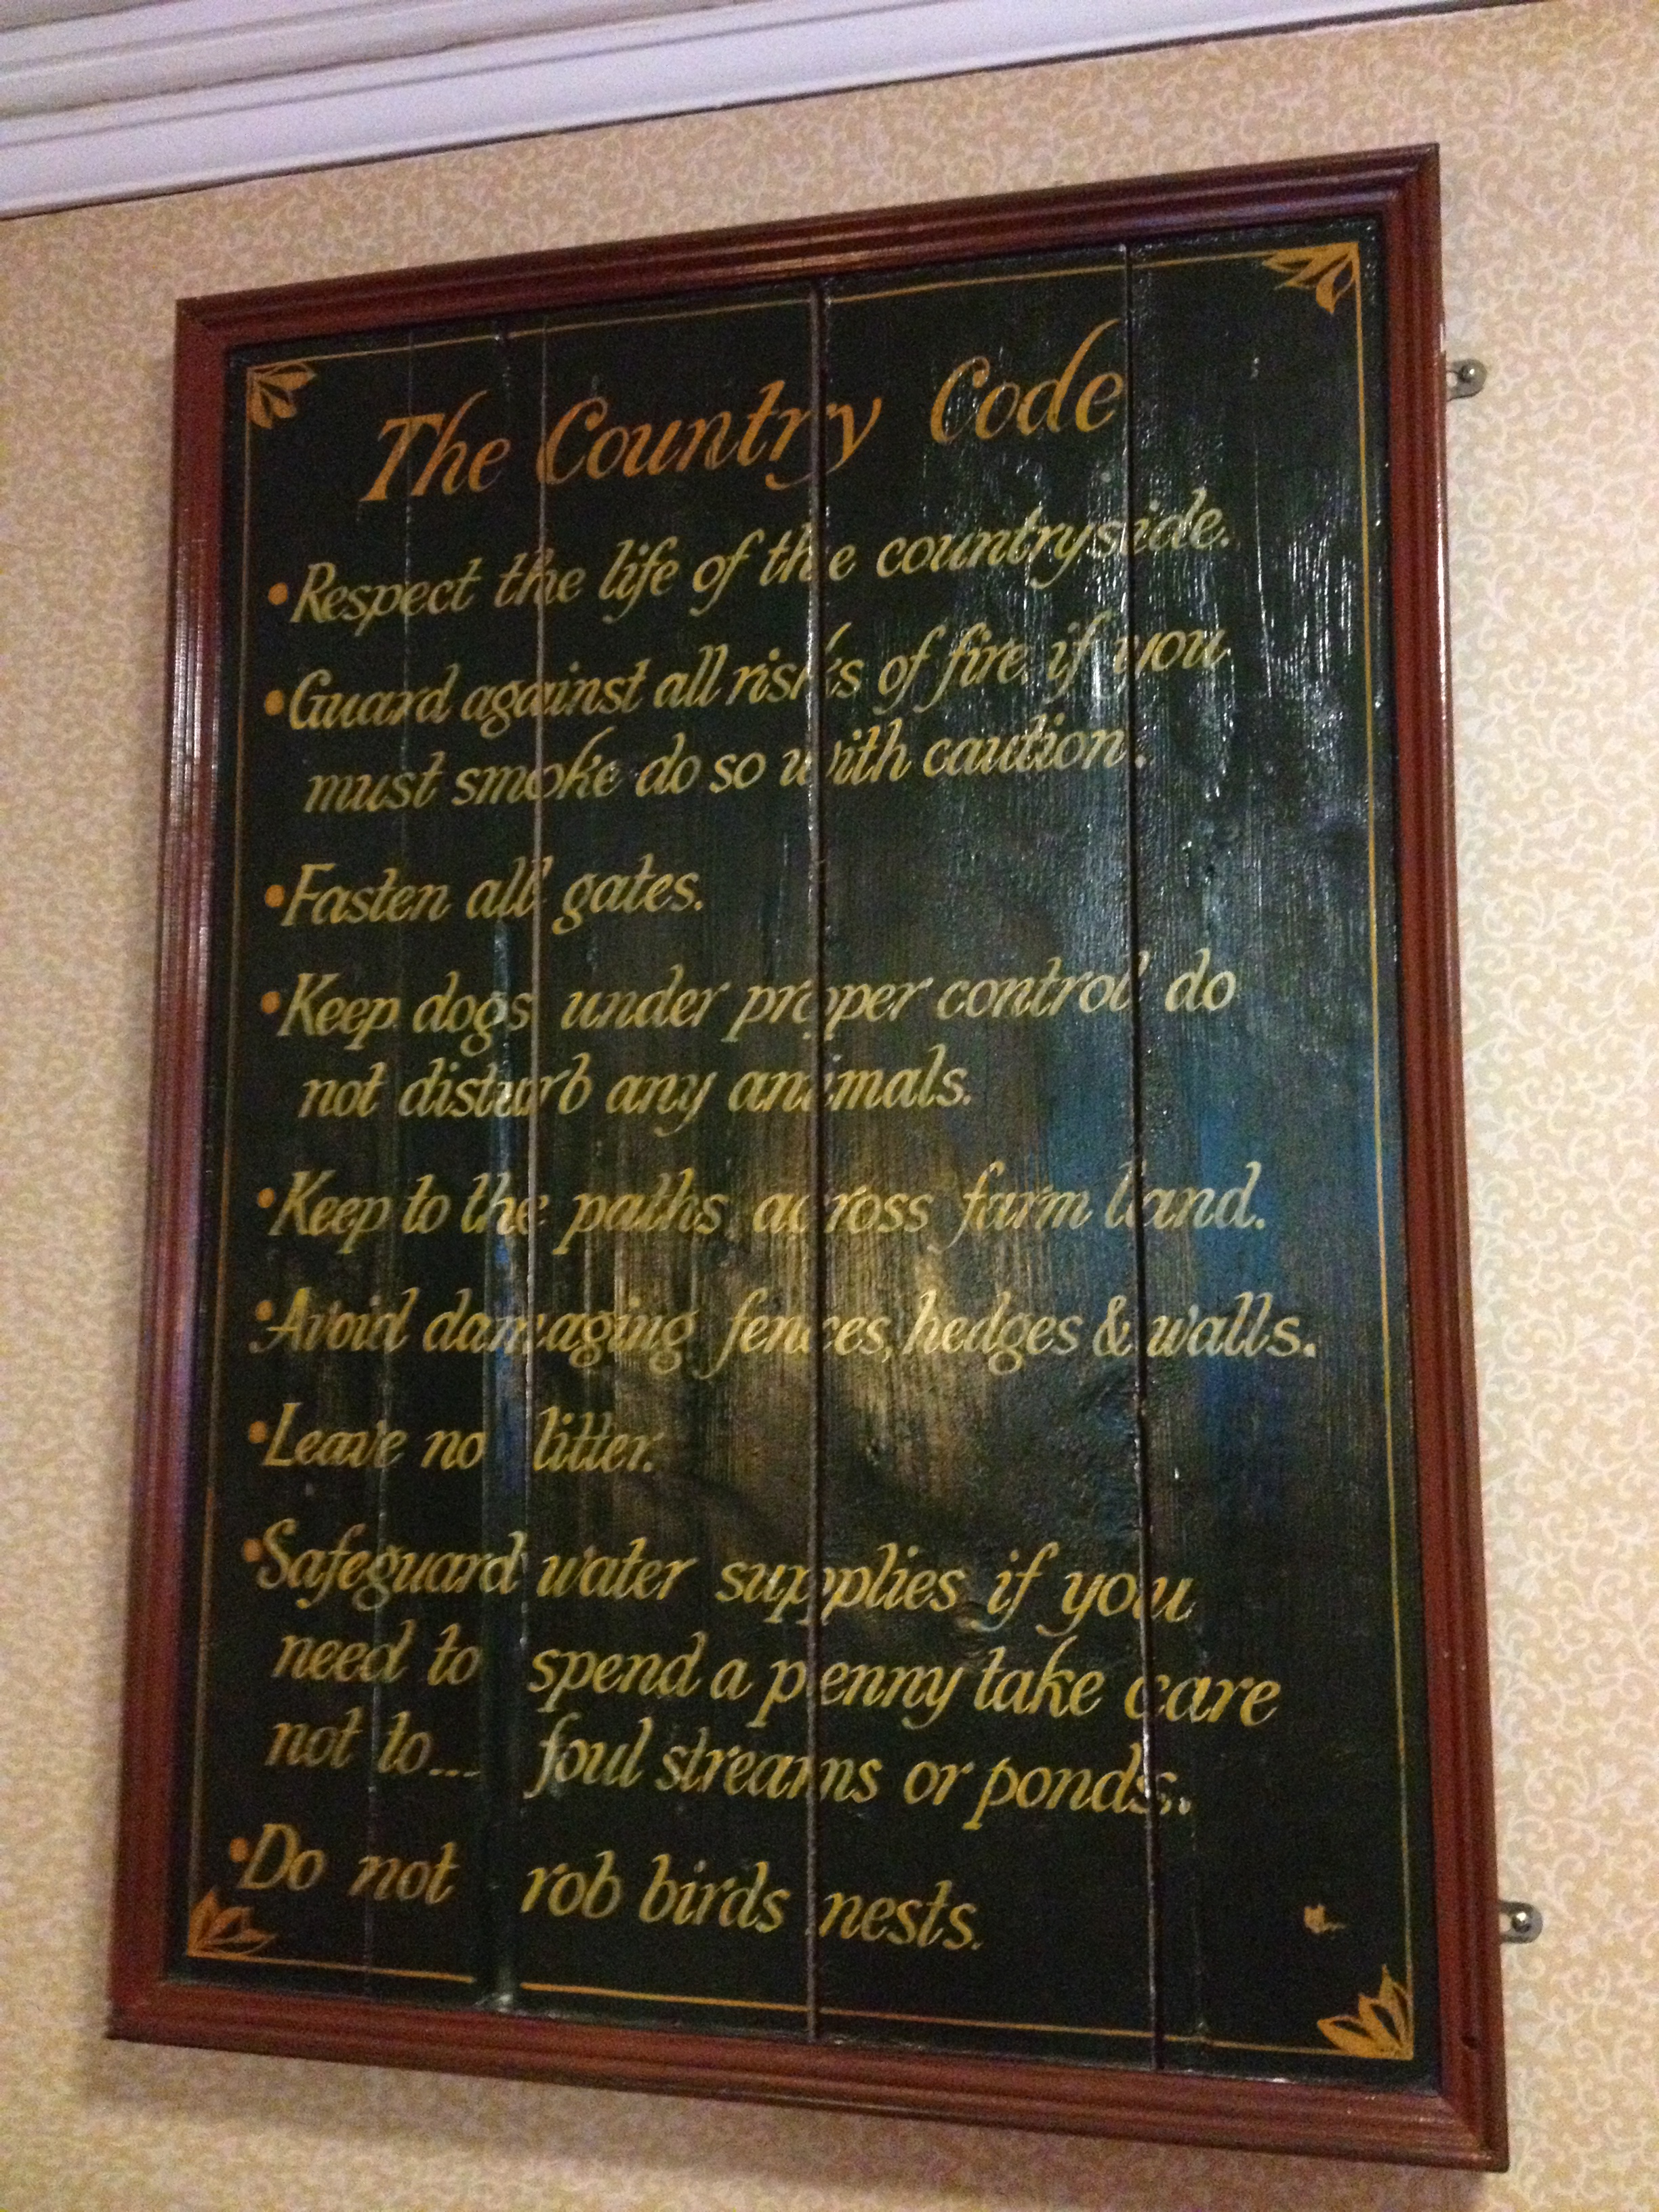 Countryside code